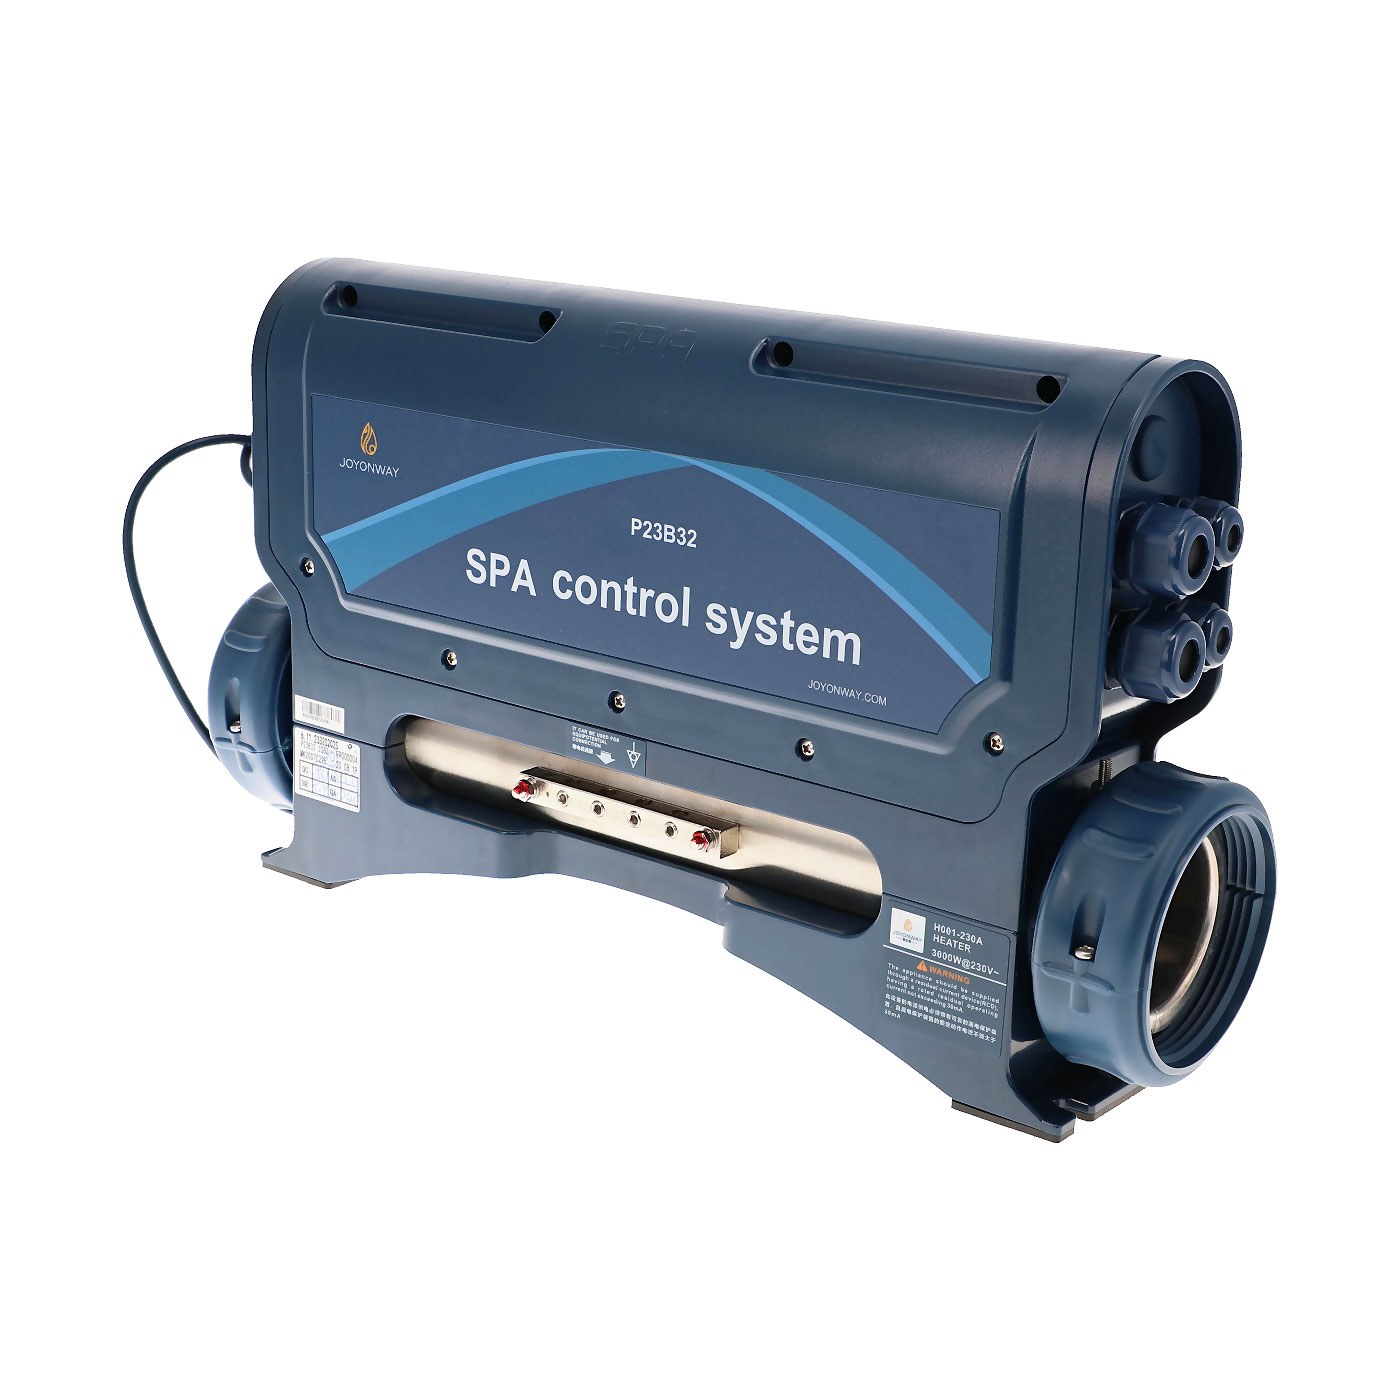 P23B32 spa control box with spa heater